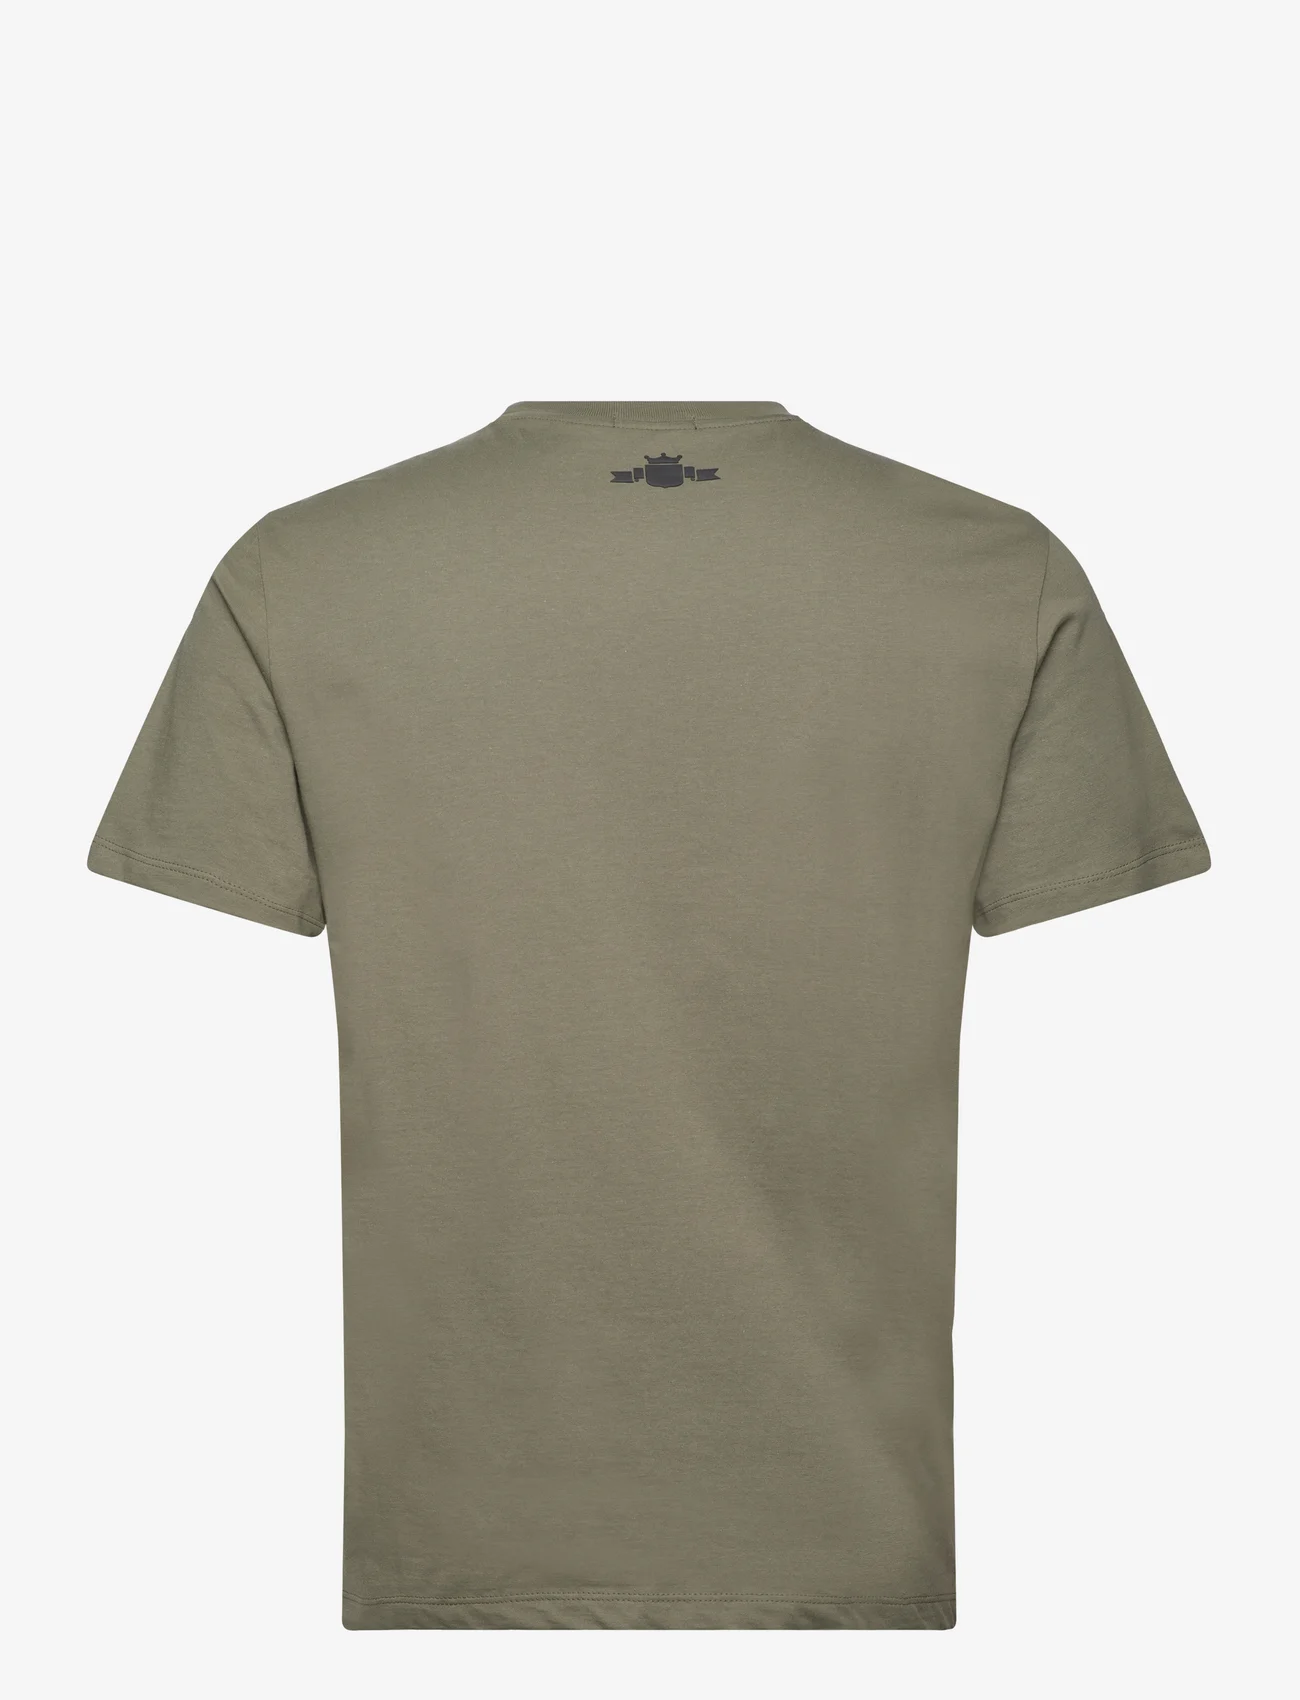 Replay - T-Shirt REGULAR PURE LOGO - kurzärmelige - khaki green - 1